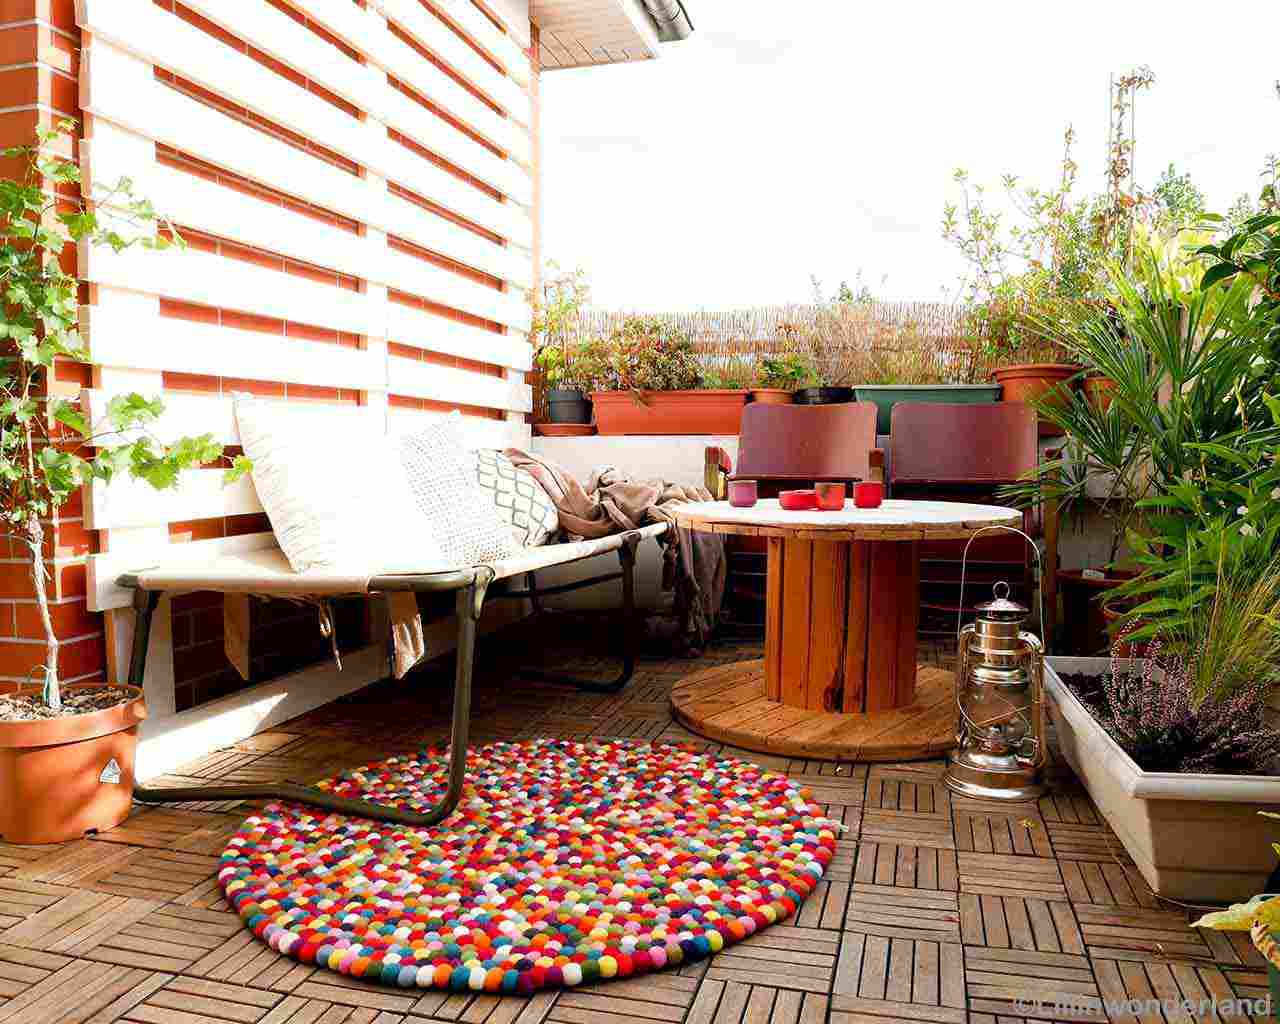 Sätt upp din balkong Idéer billigt Bygg dina egna möbler Levande trender